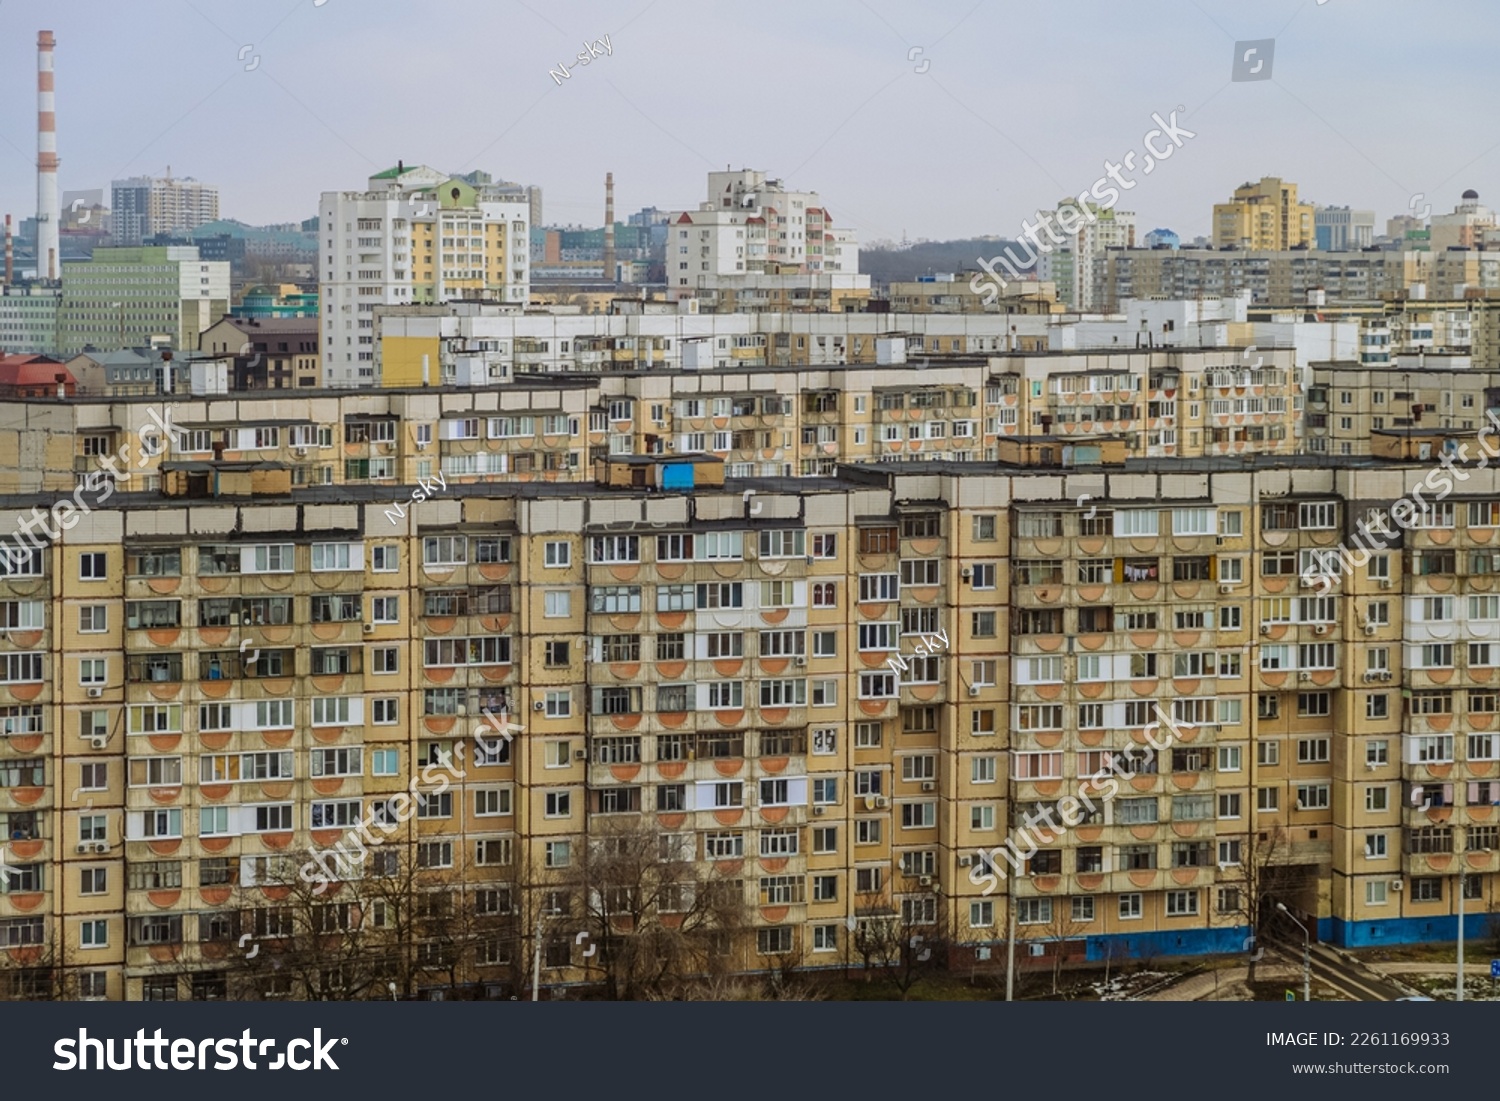 Skyline of commieblock houses. Soviet period apartment blocks in Belgorod left-bank residential area. #2261169933